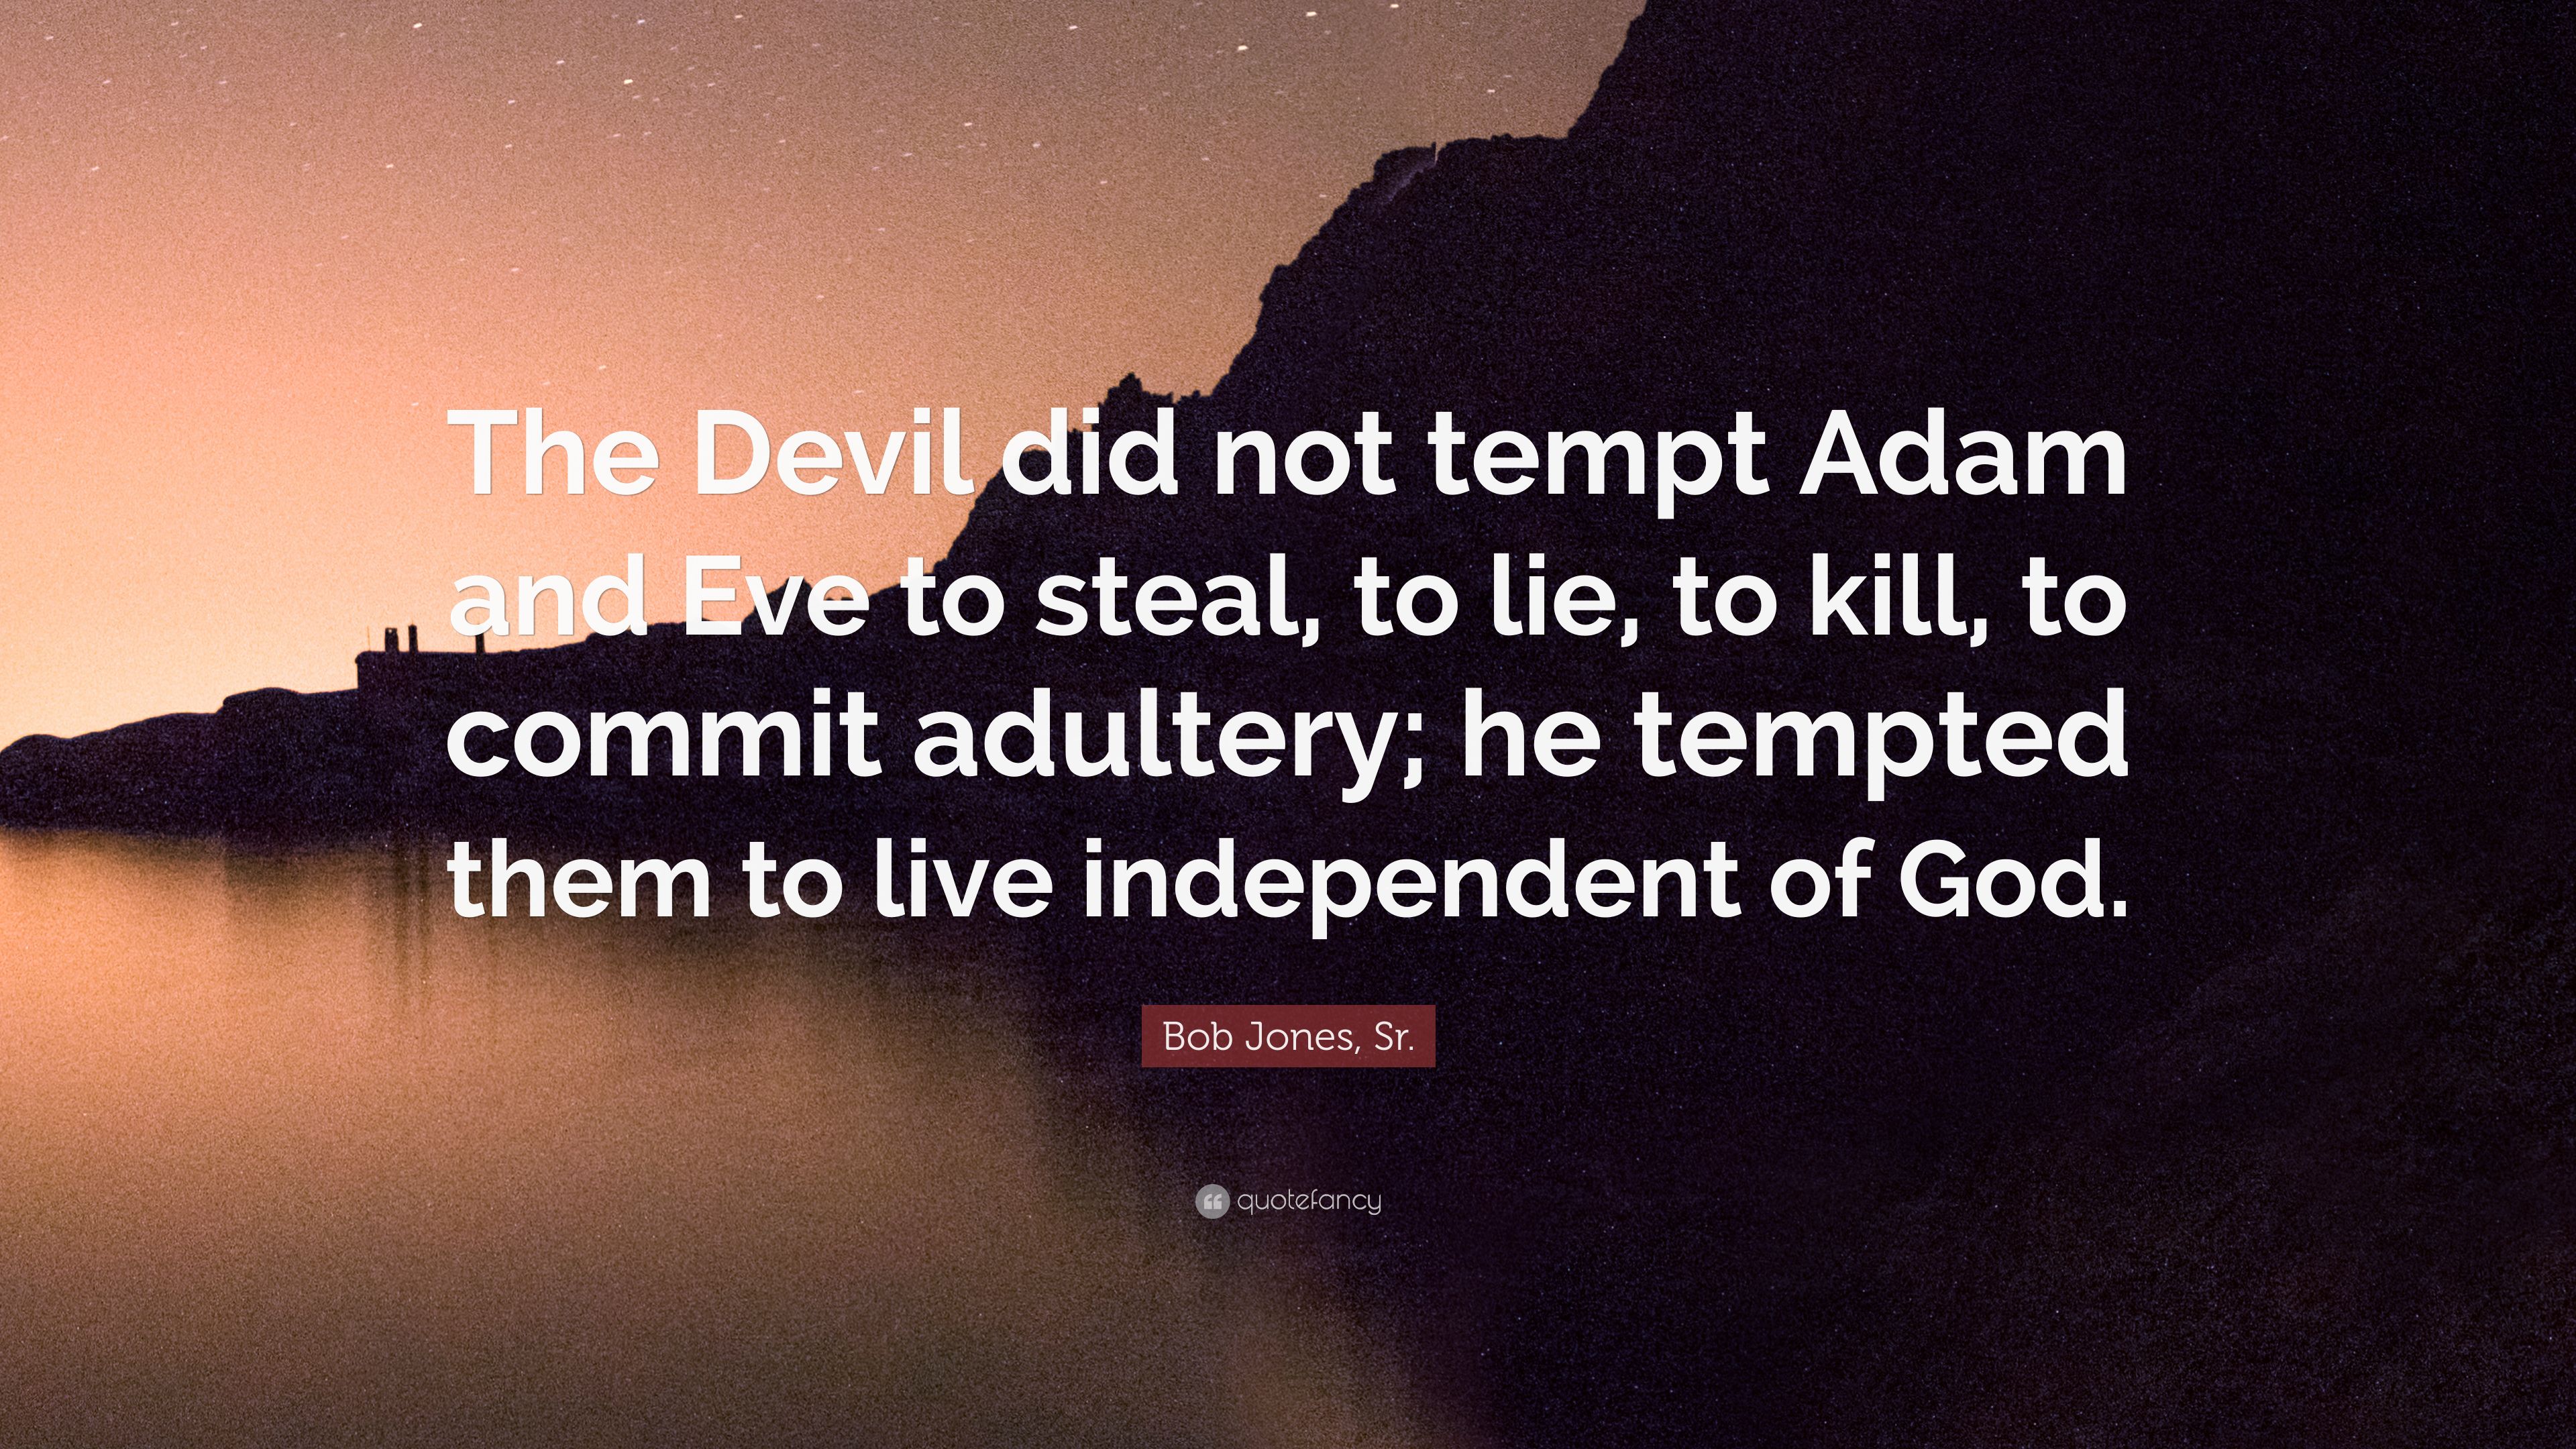 Bob Jones, Sr. Quote: “The Devil did not tempt Adam and Eve to